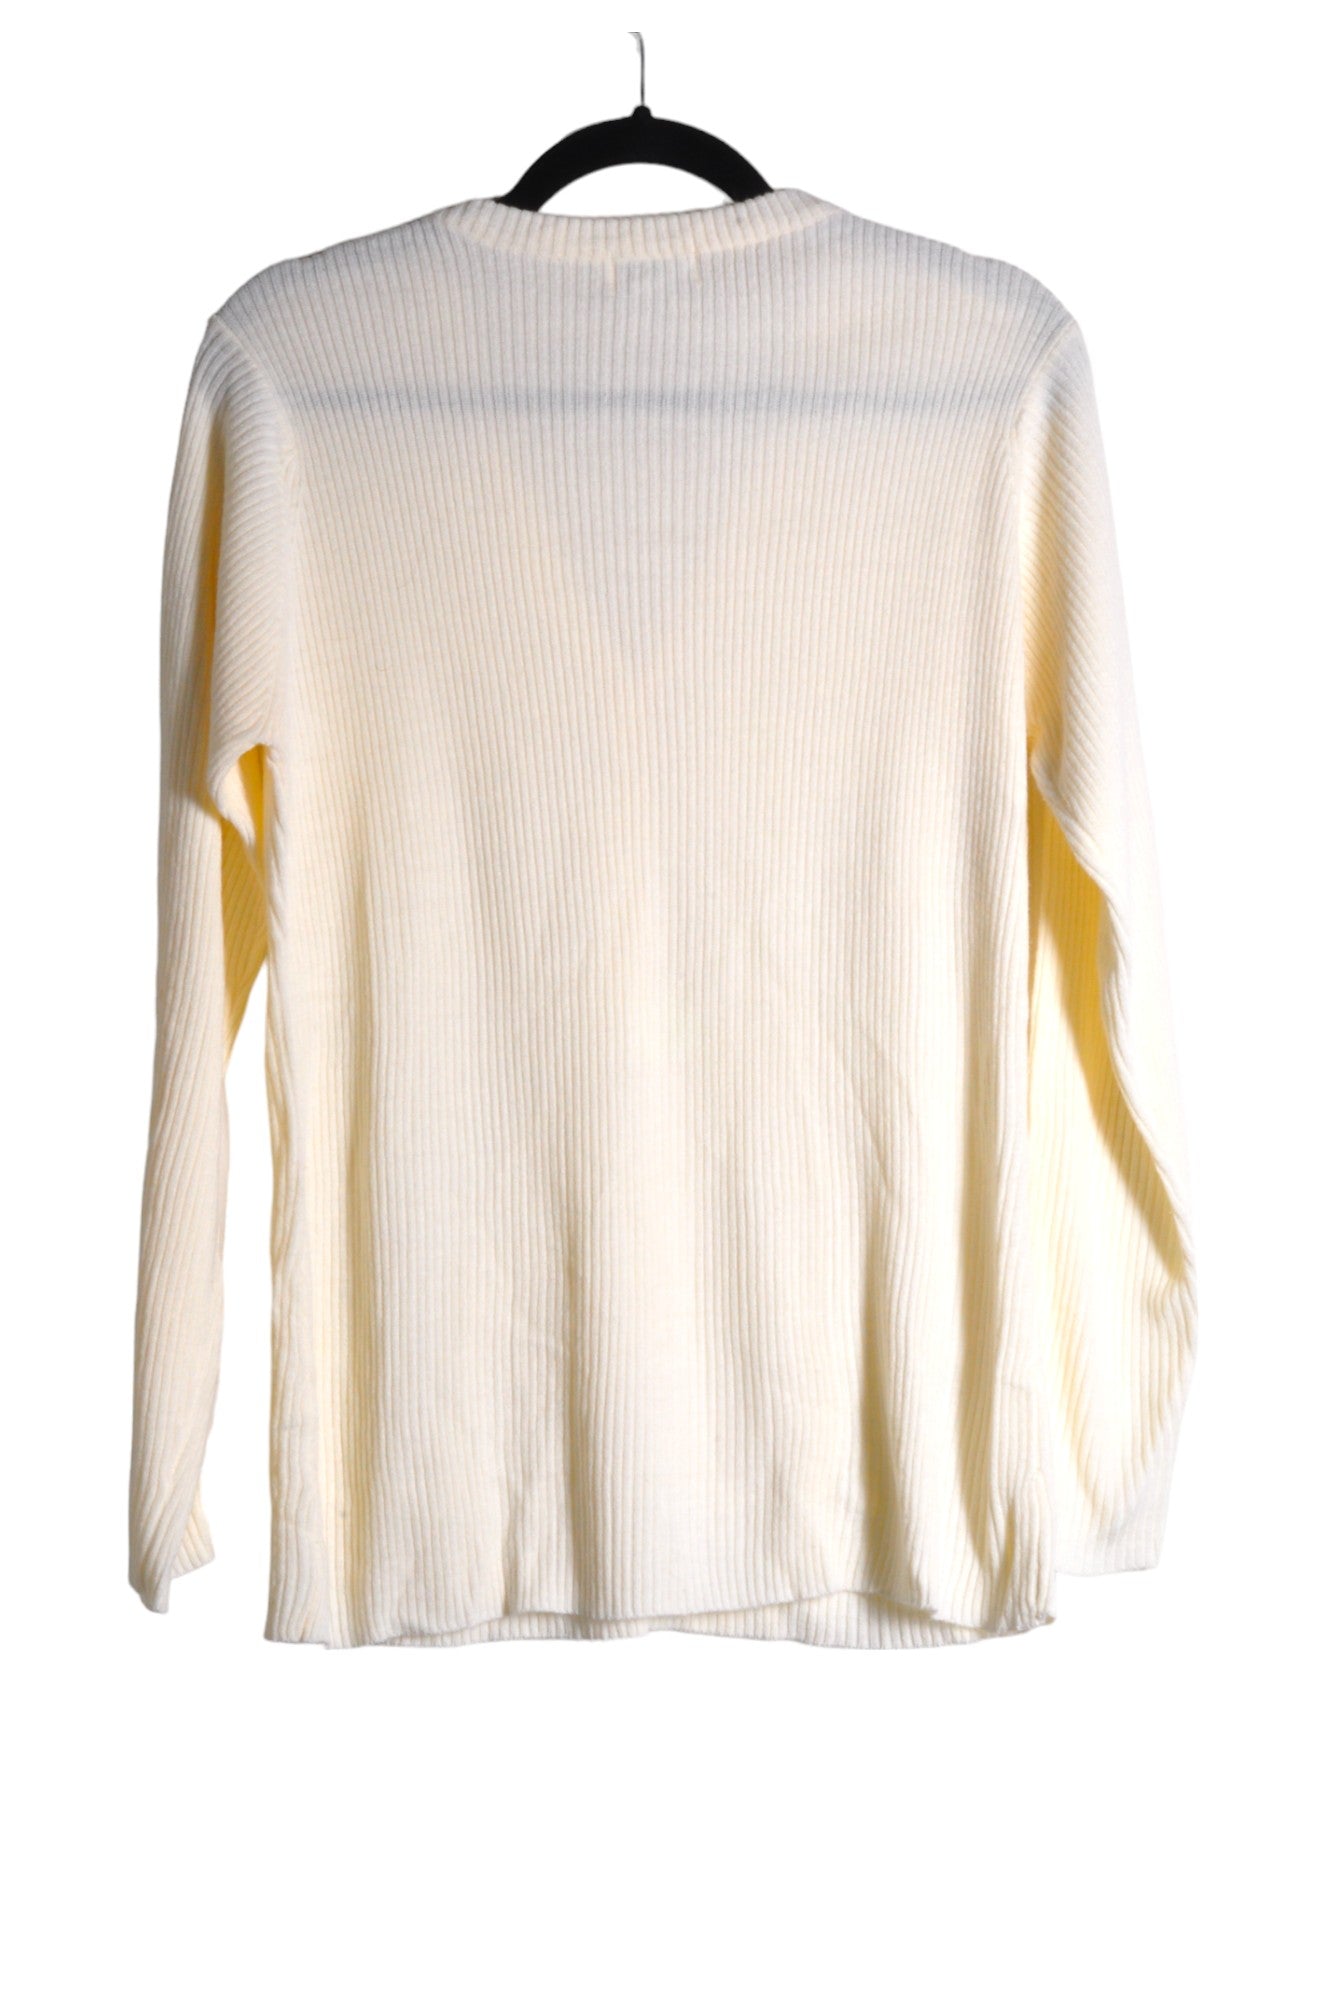 MIDTOWN Women T-Shirts Regular fit in White - Size 1X | 18 $ KOOP